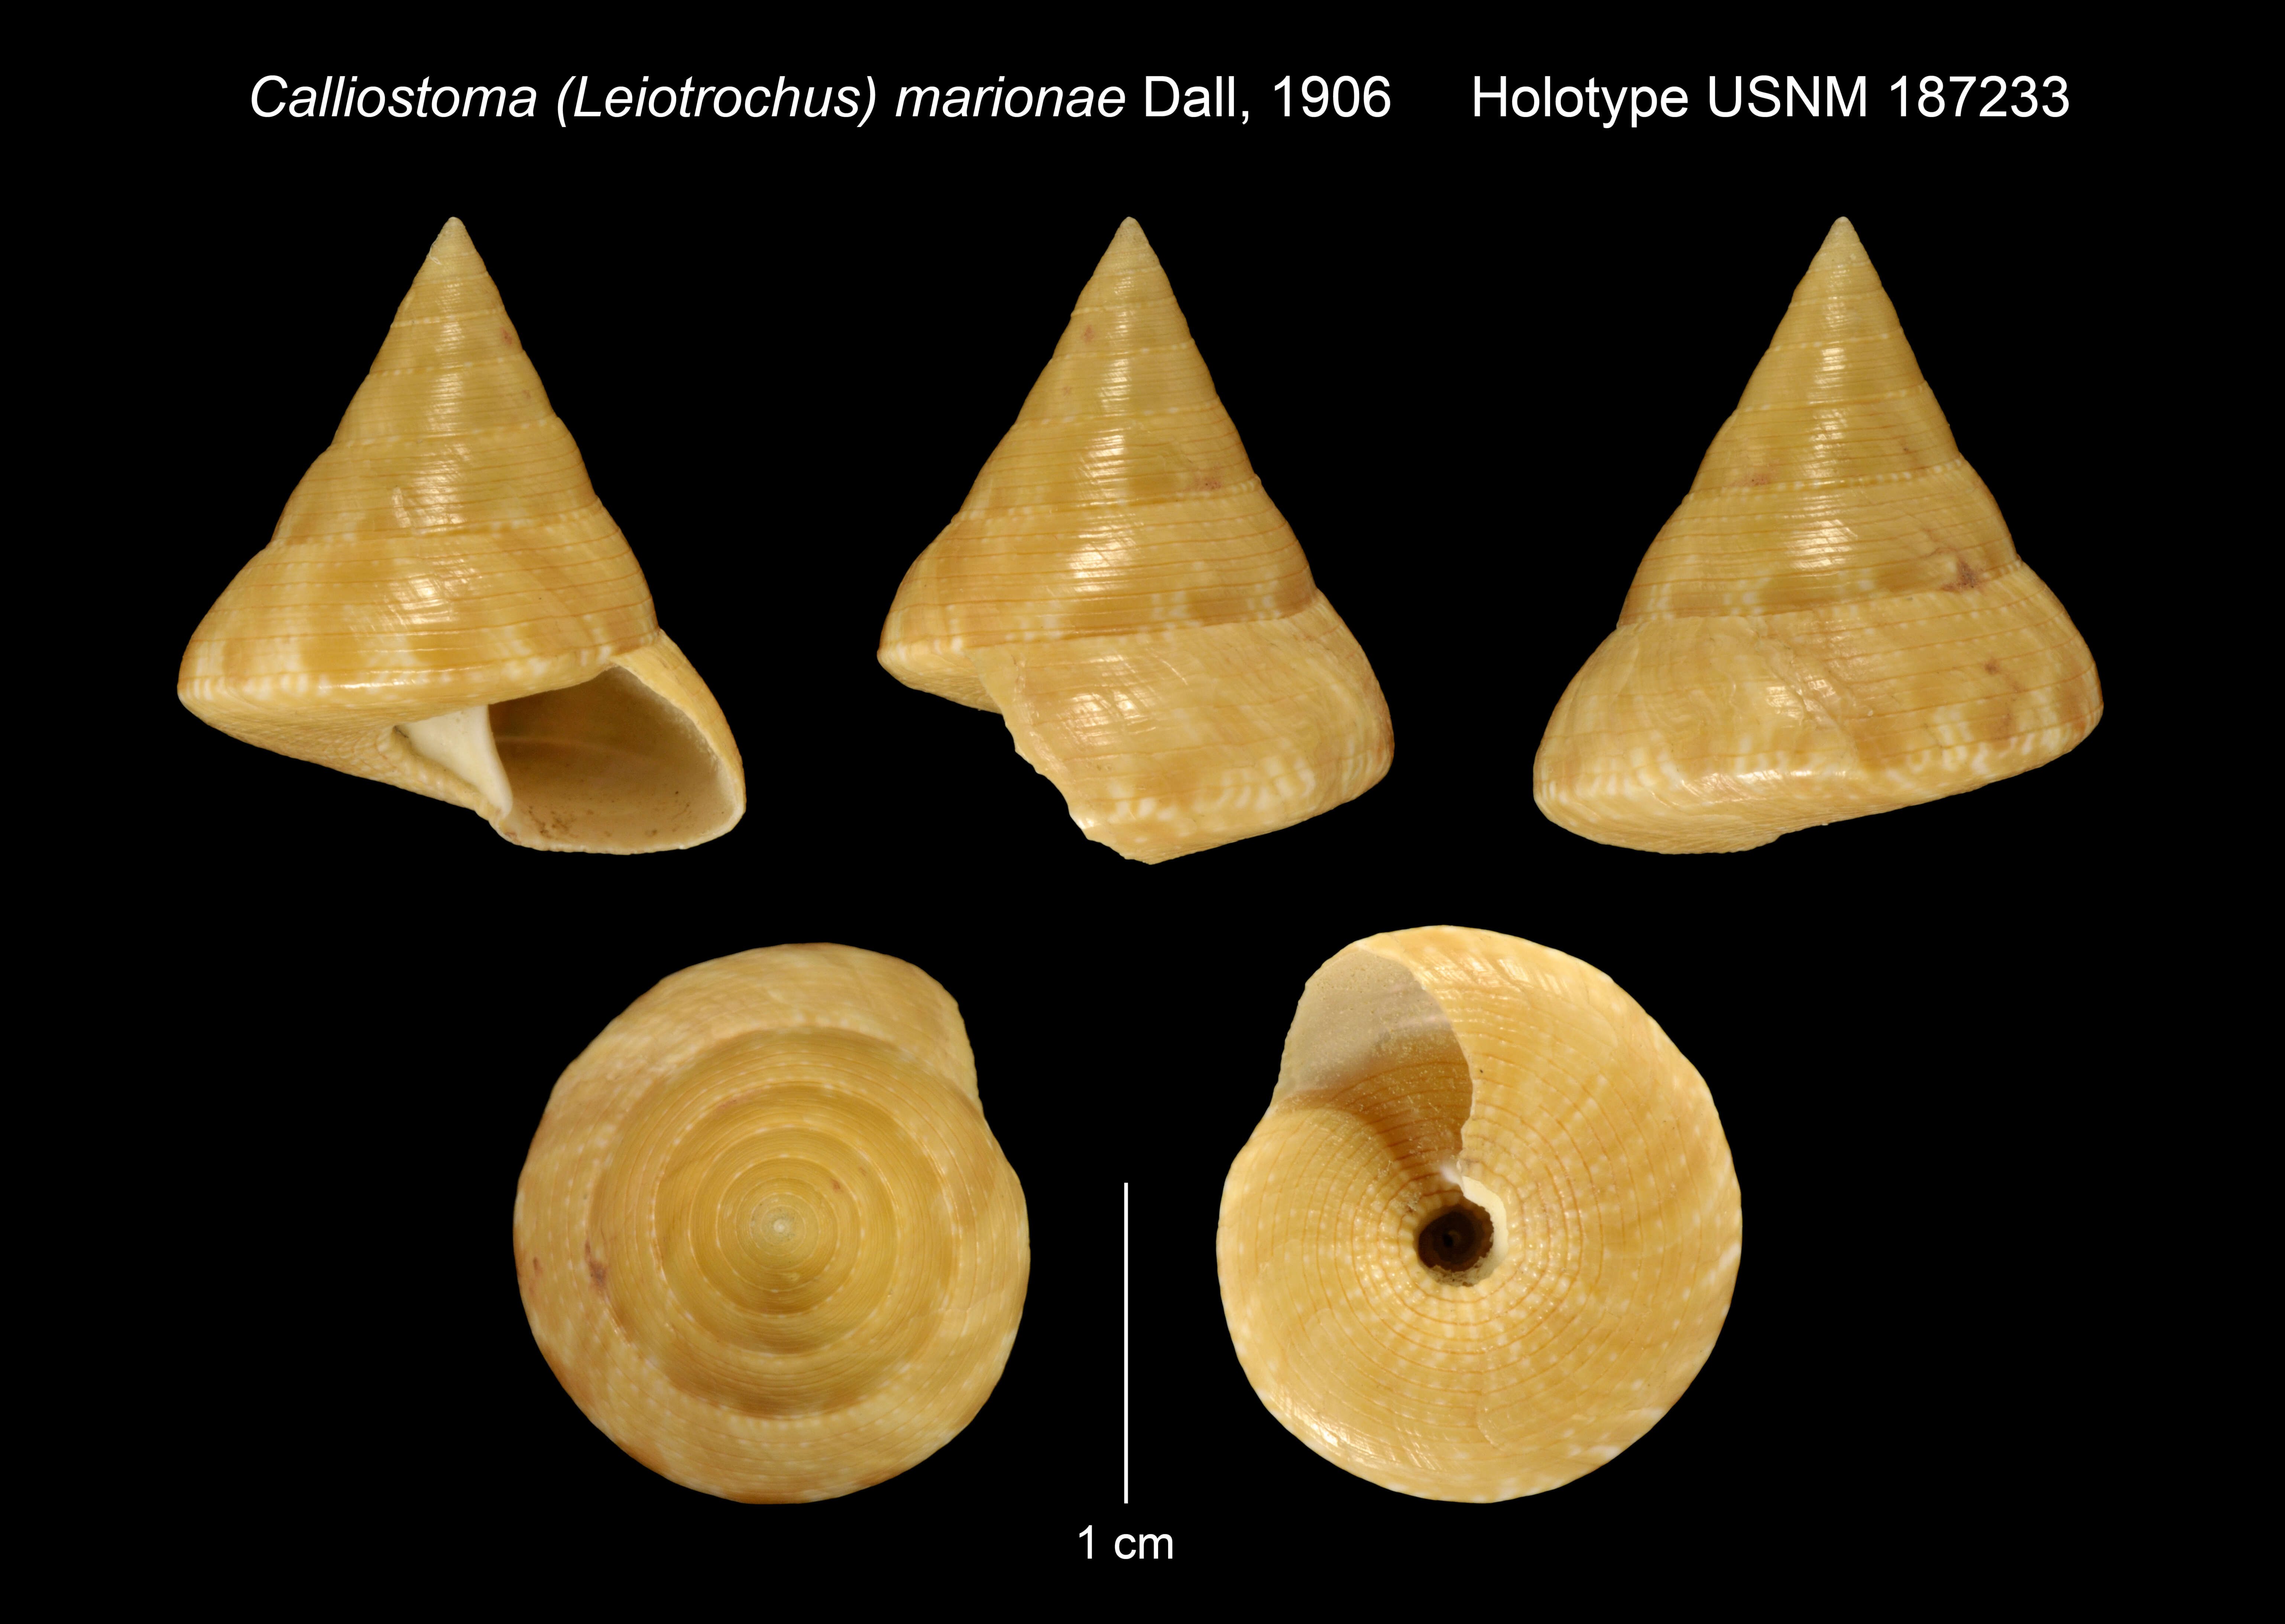 Image of Calliostoma marionae Dall 1906